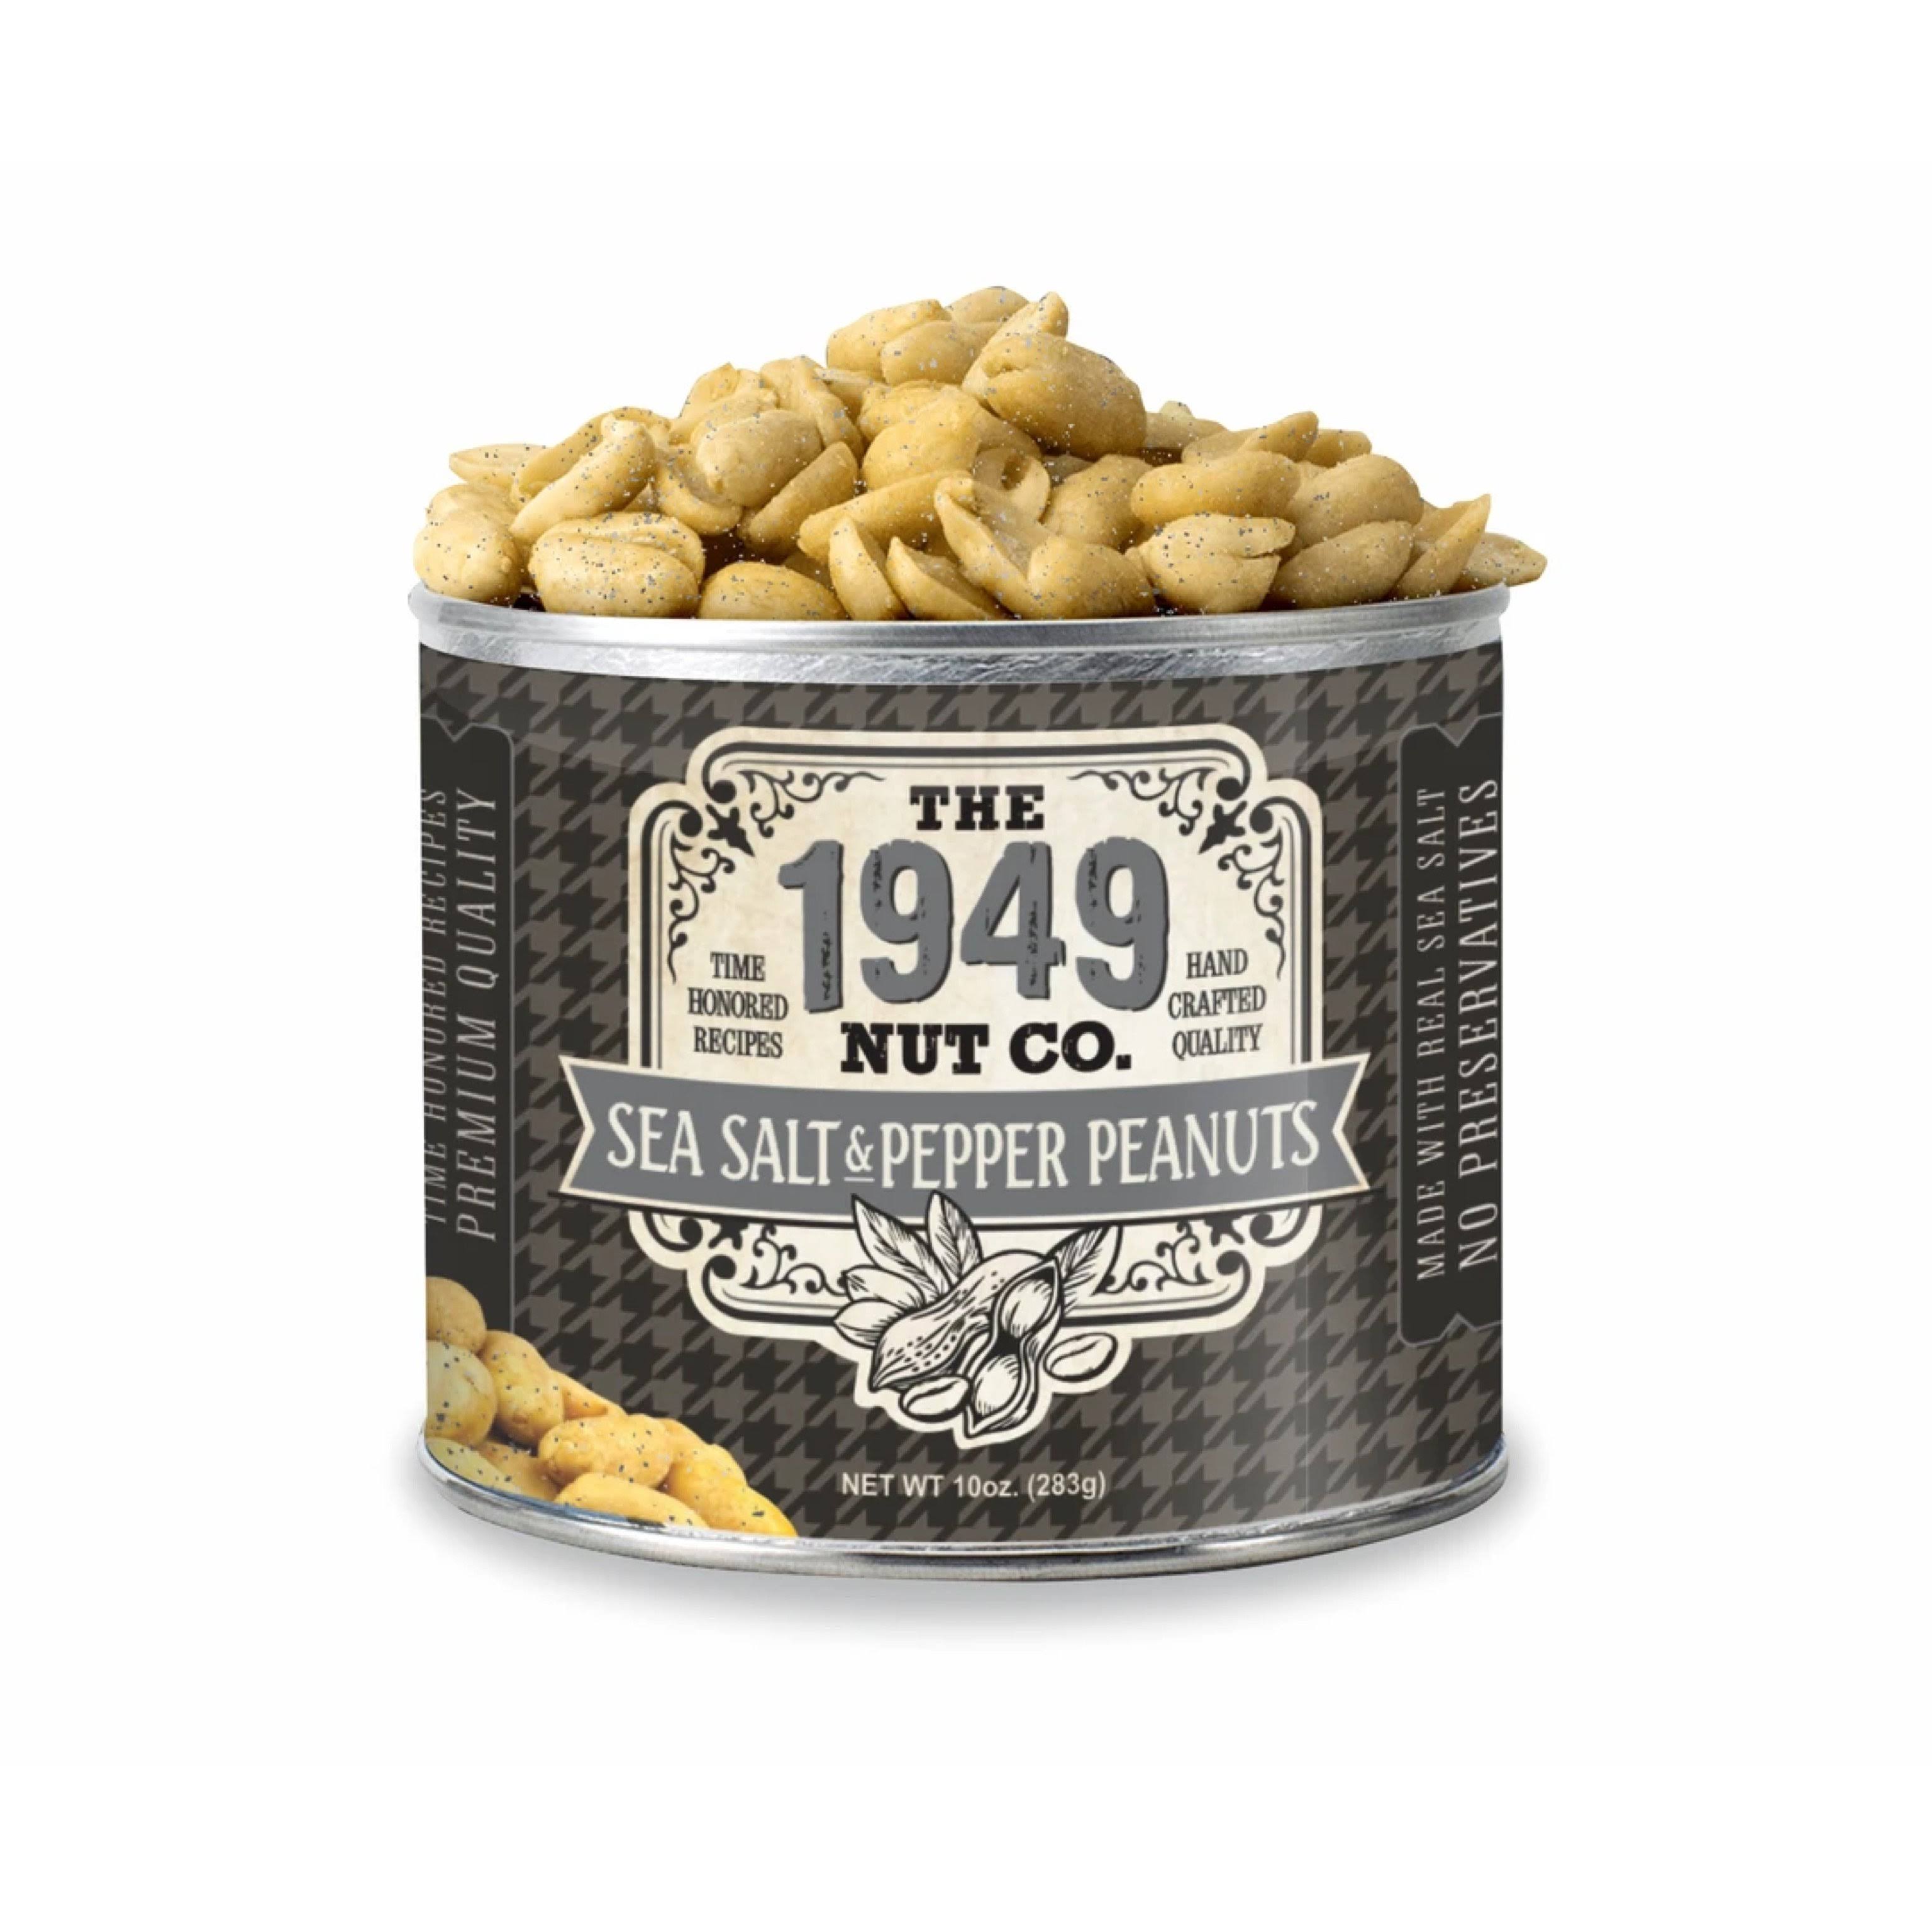 Sea Salt & Pepper 10oz Peanuts by The 1949 Nut Co.